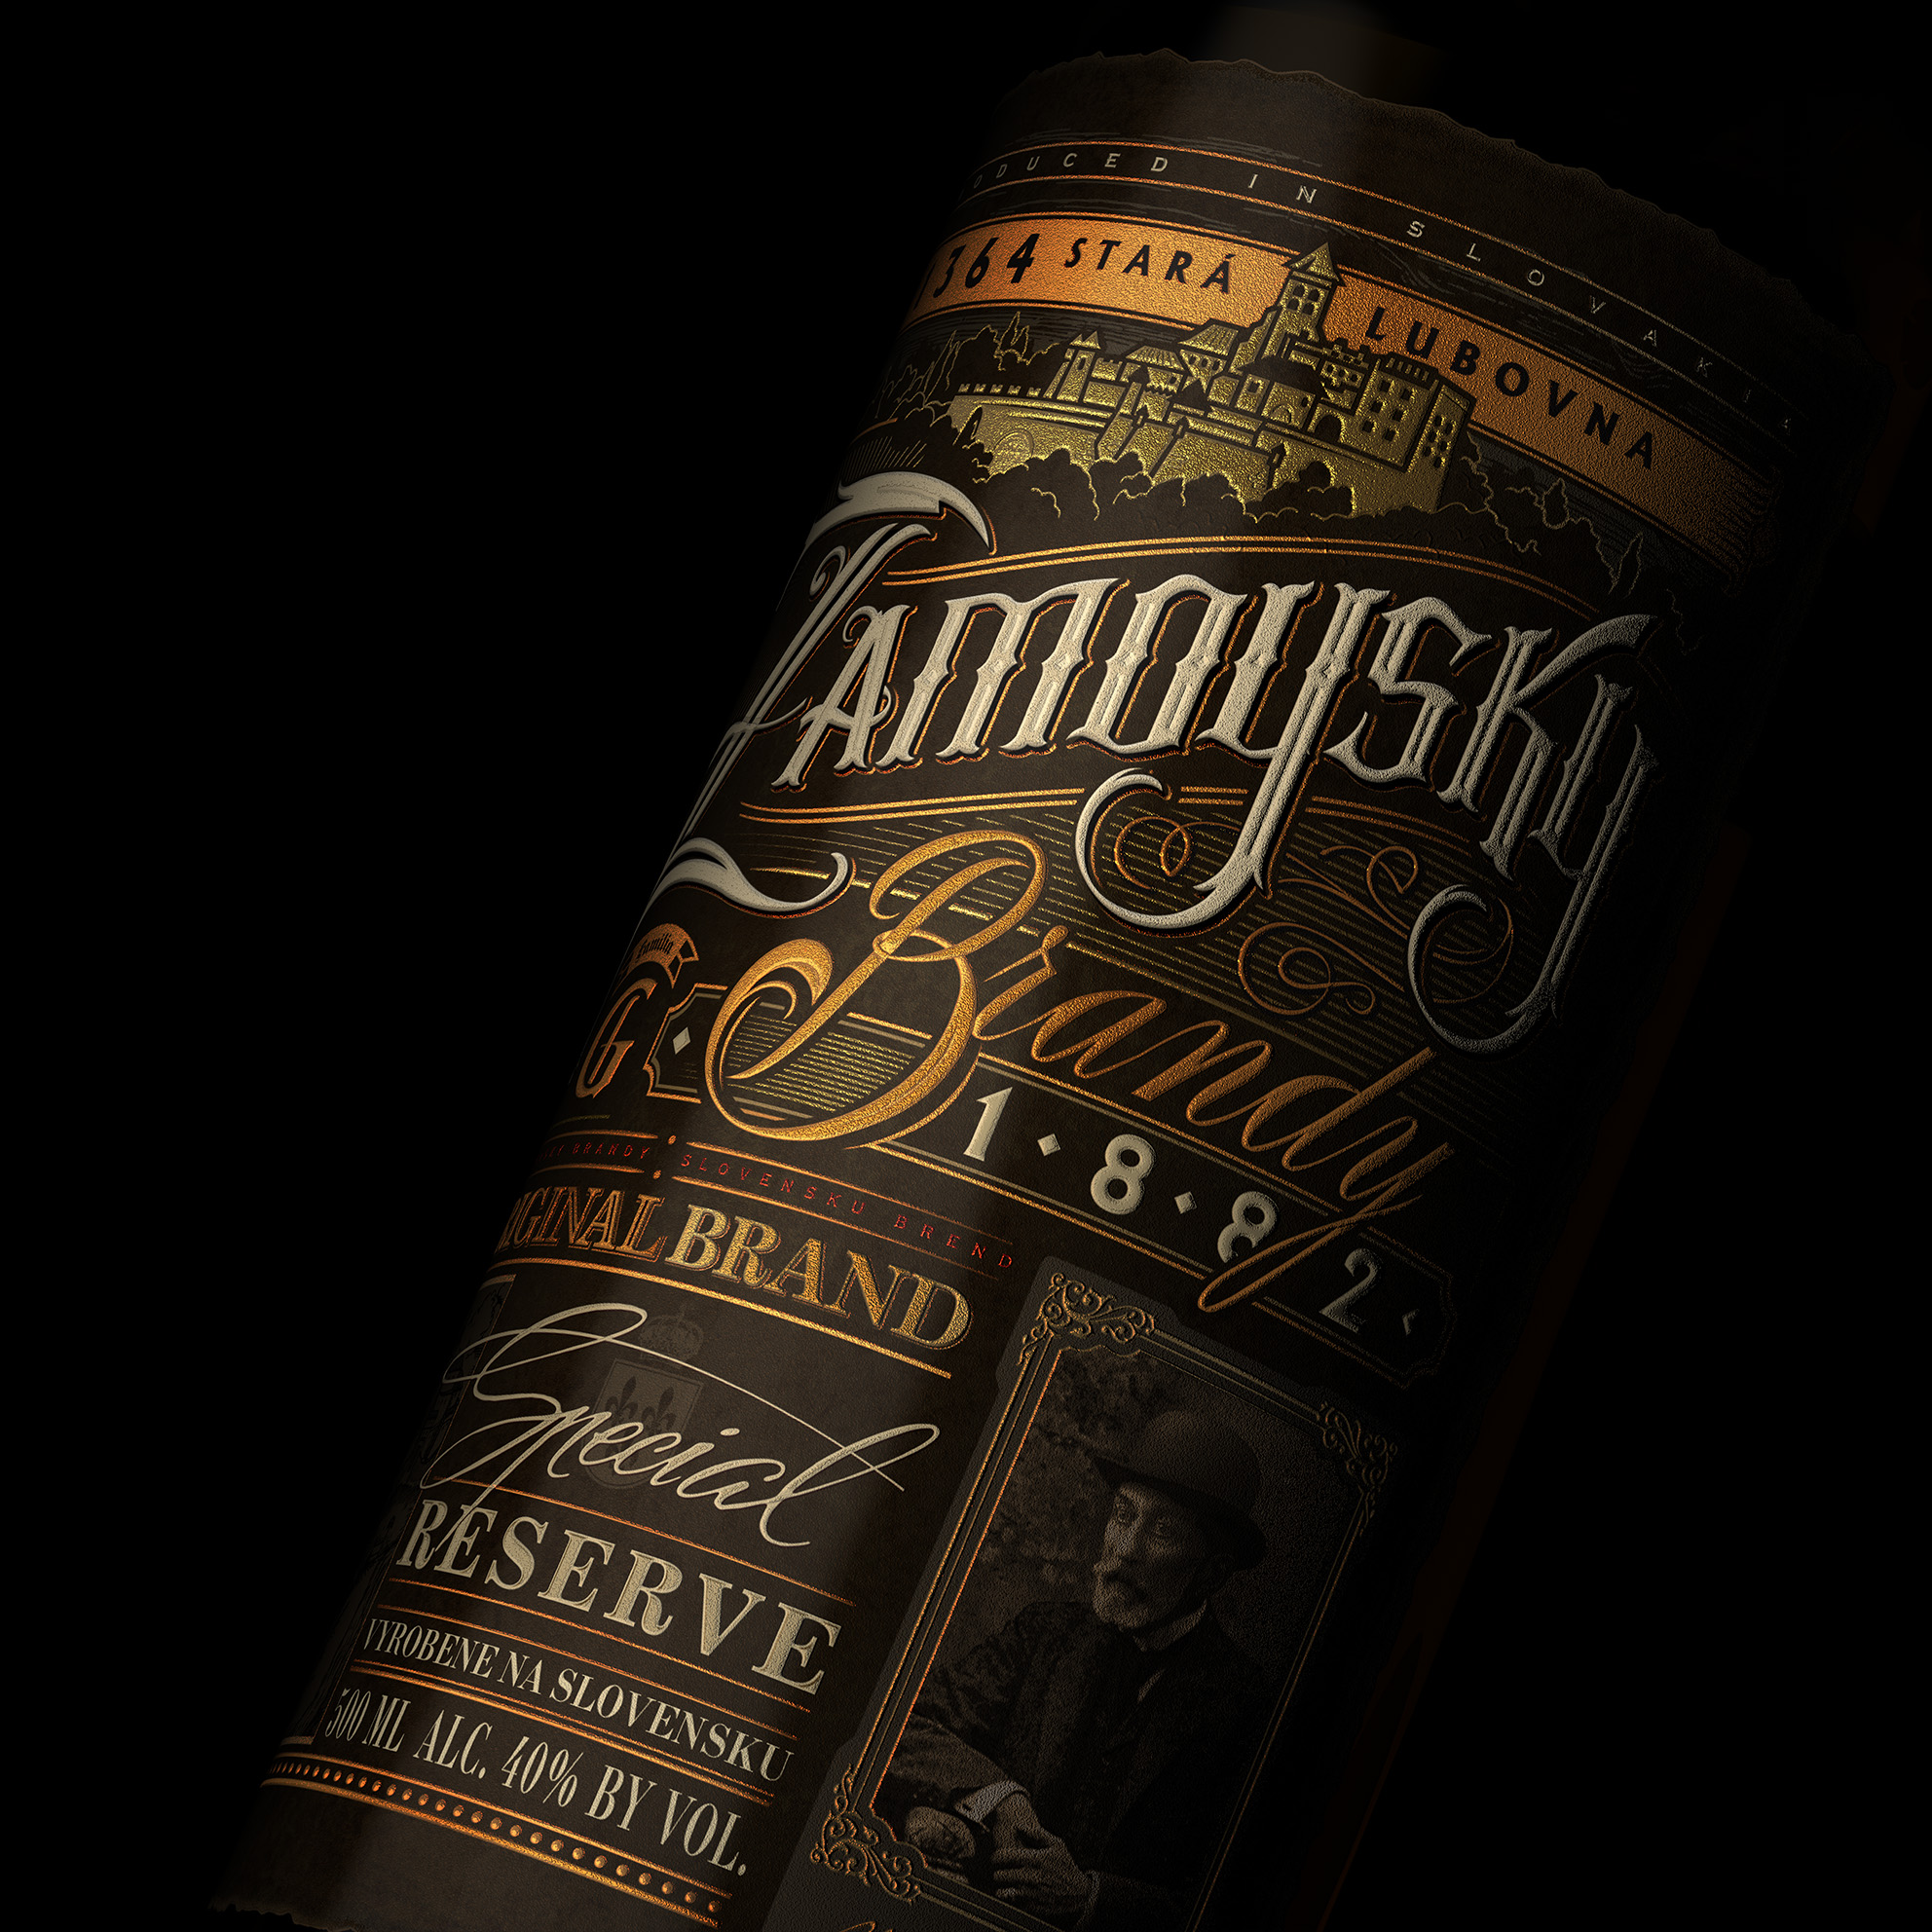 New Design for Zamoisky Brandy 1882